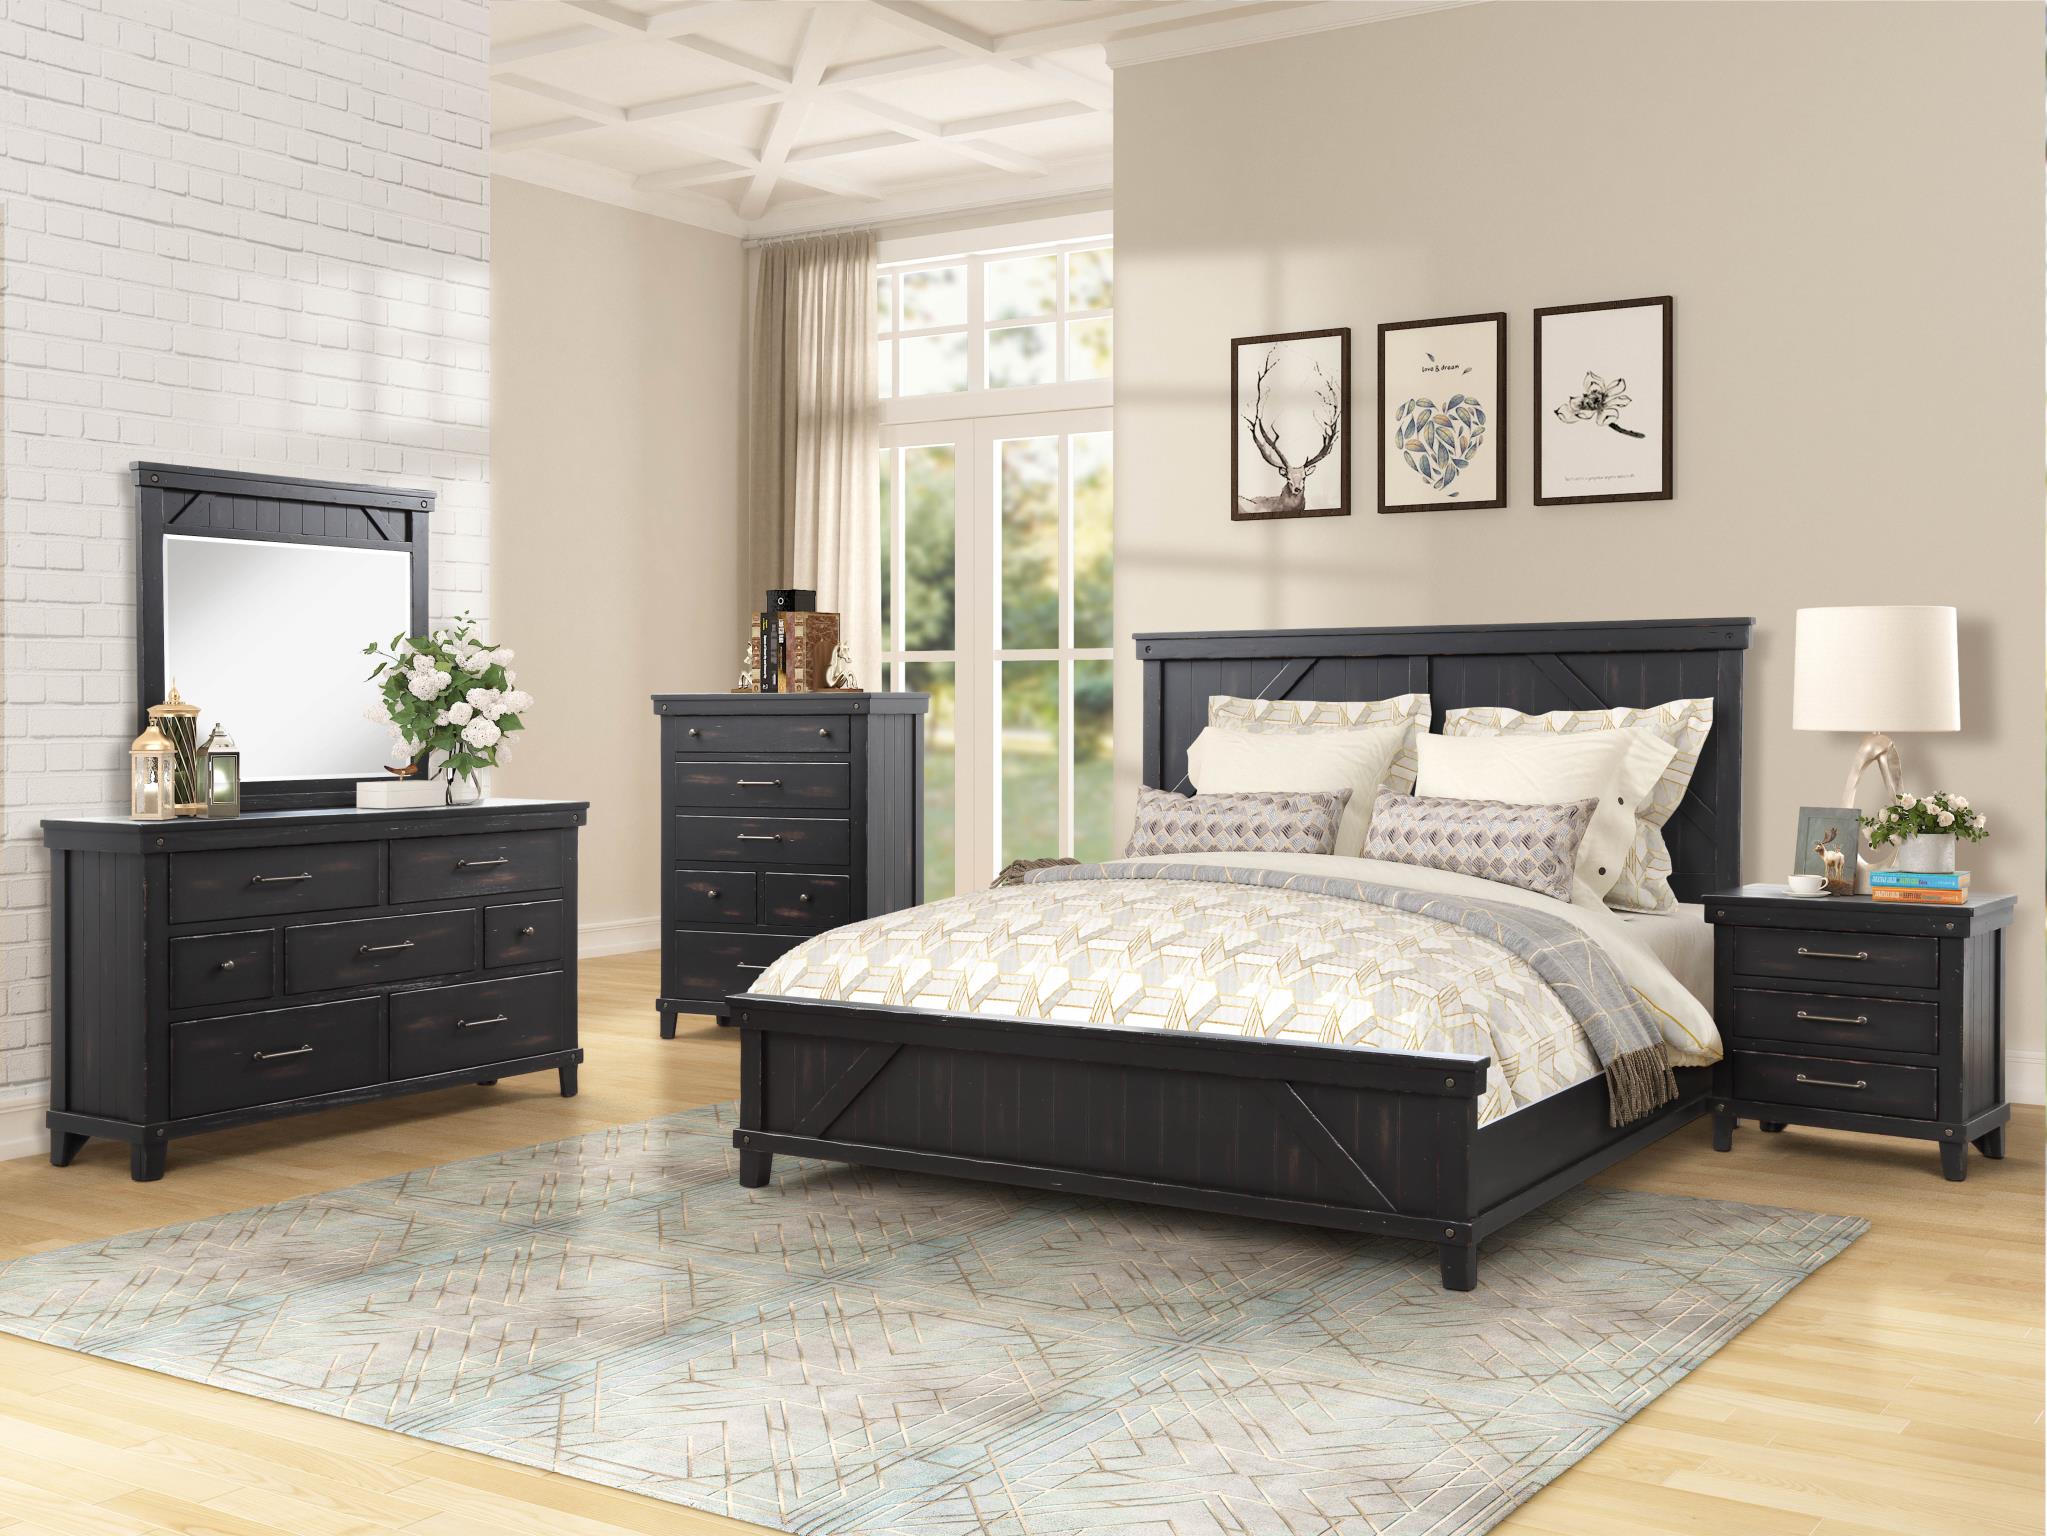 farmhouse bedroom ideas with black furniture